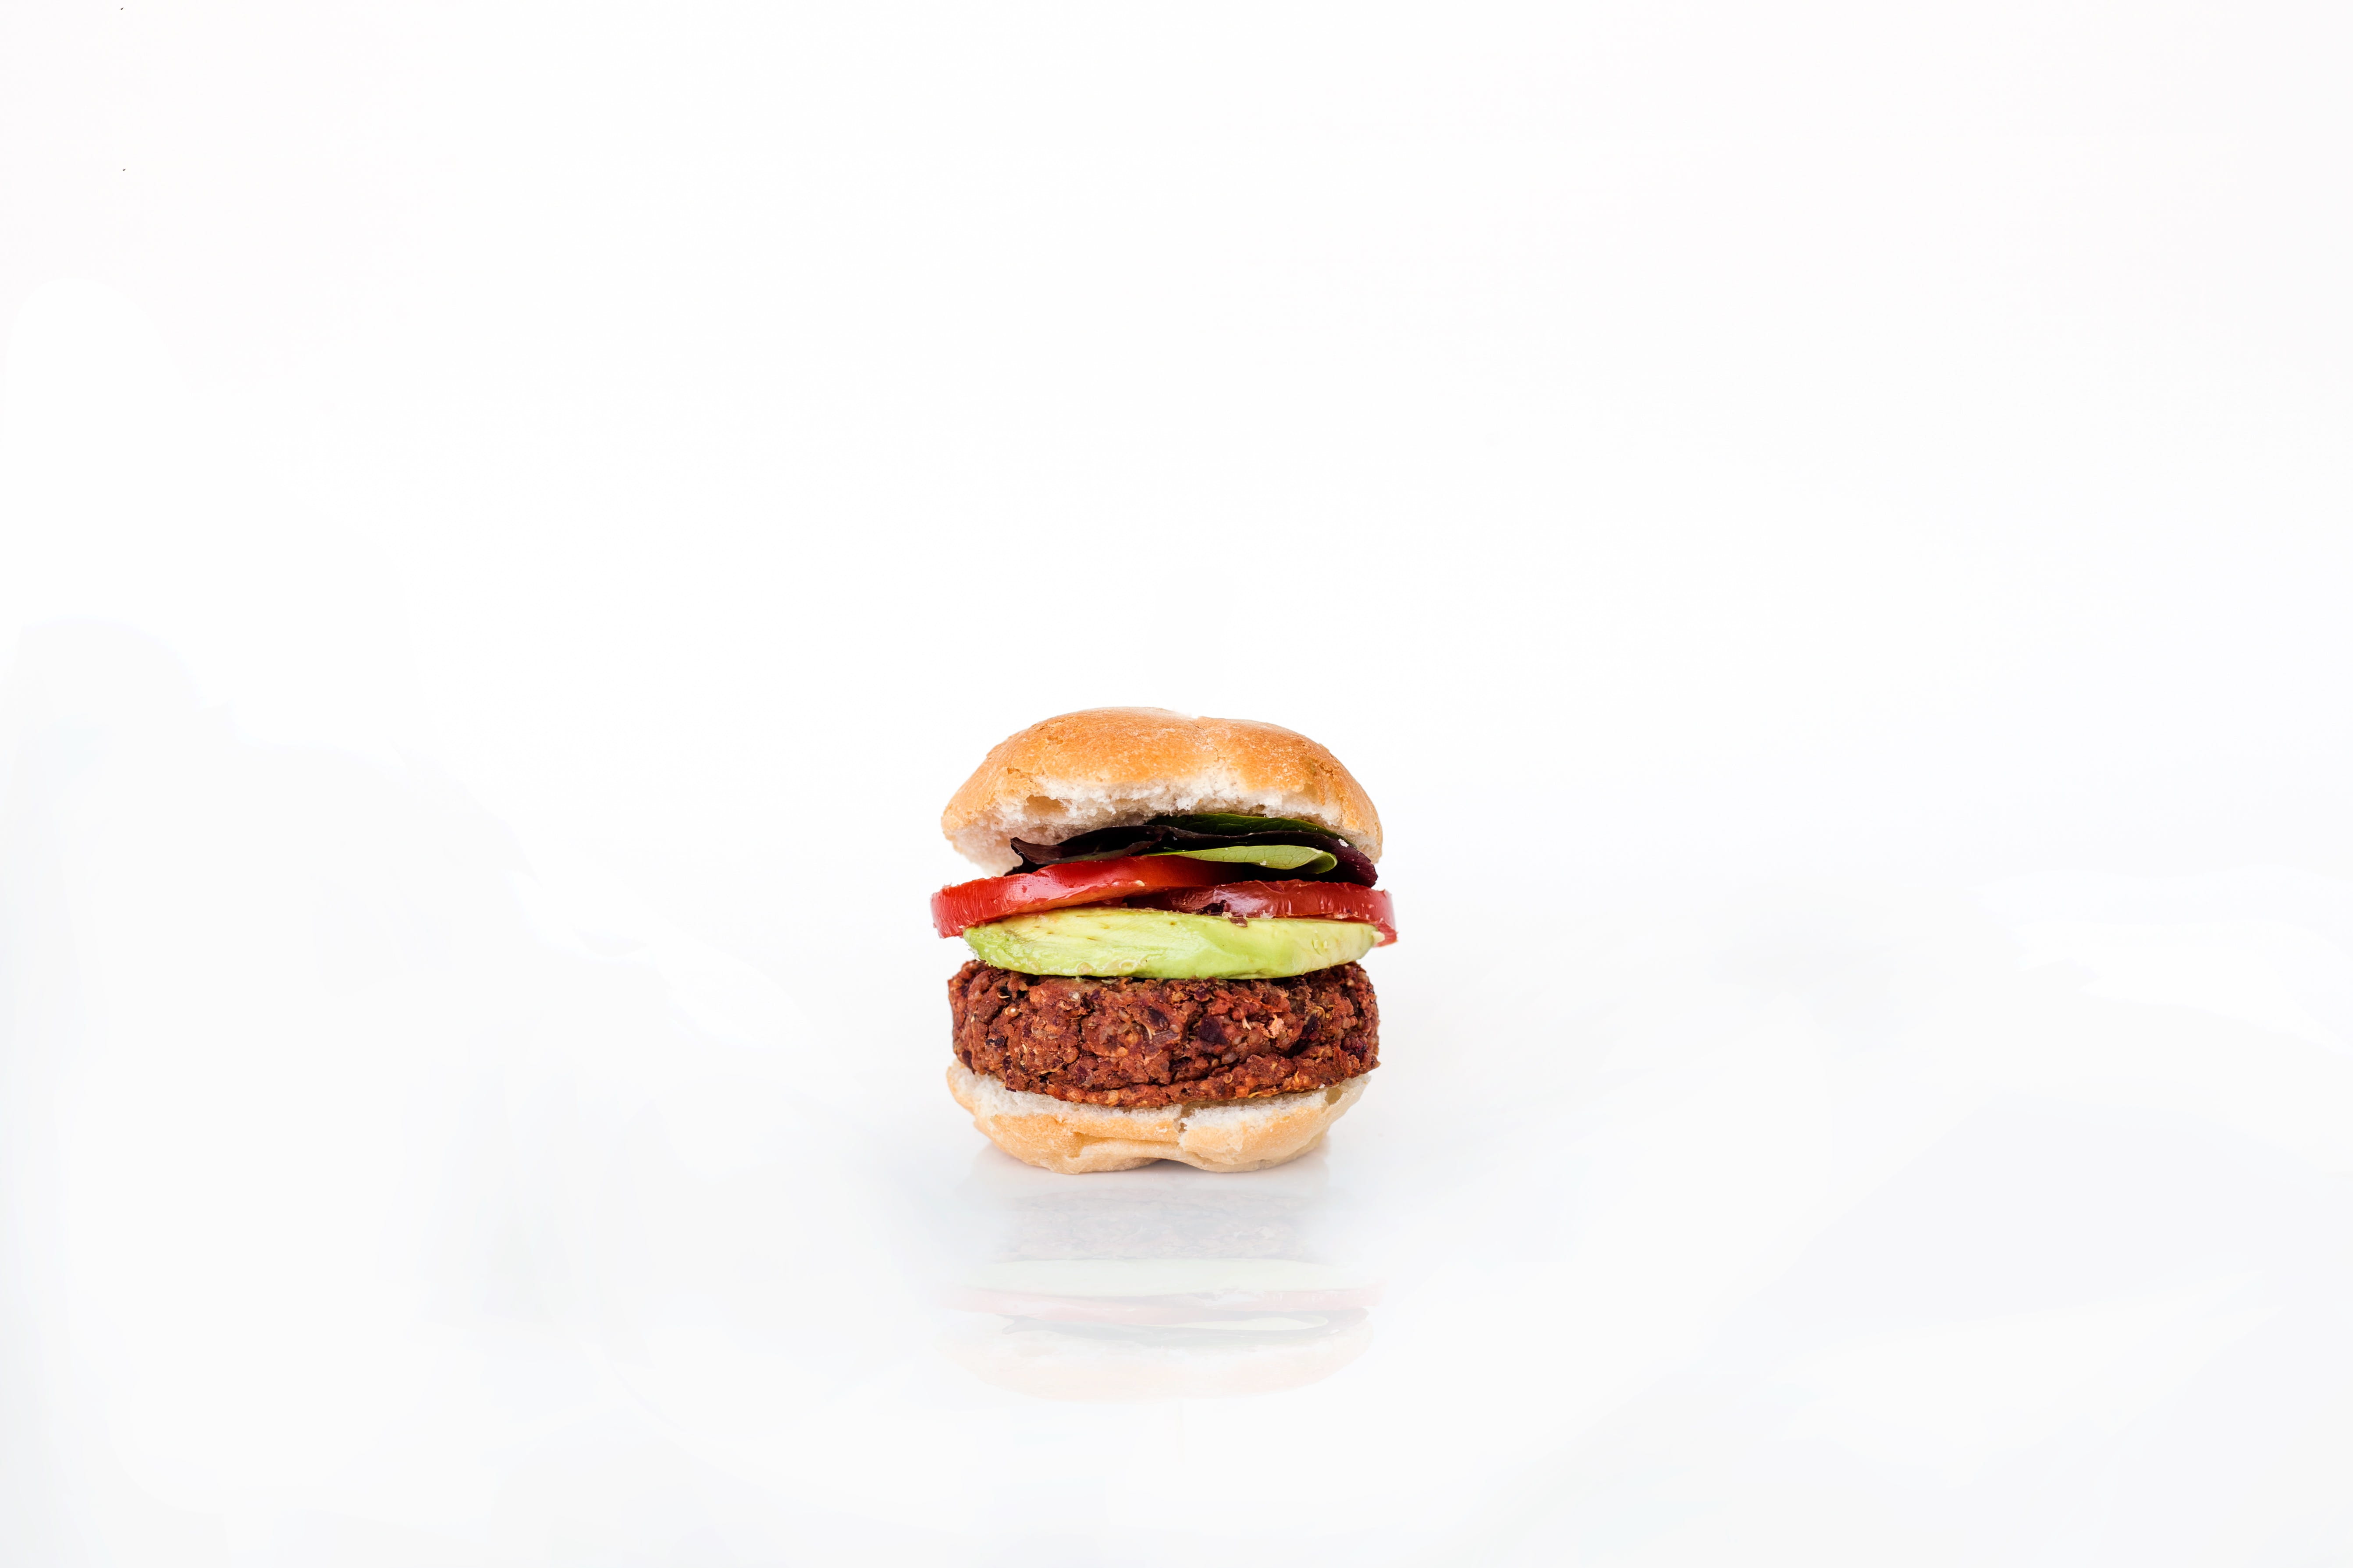 burger on white background, food, eat, kitchen, minimal, clean eating